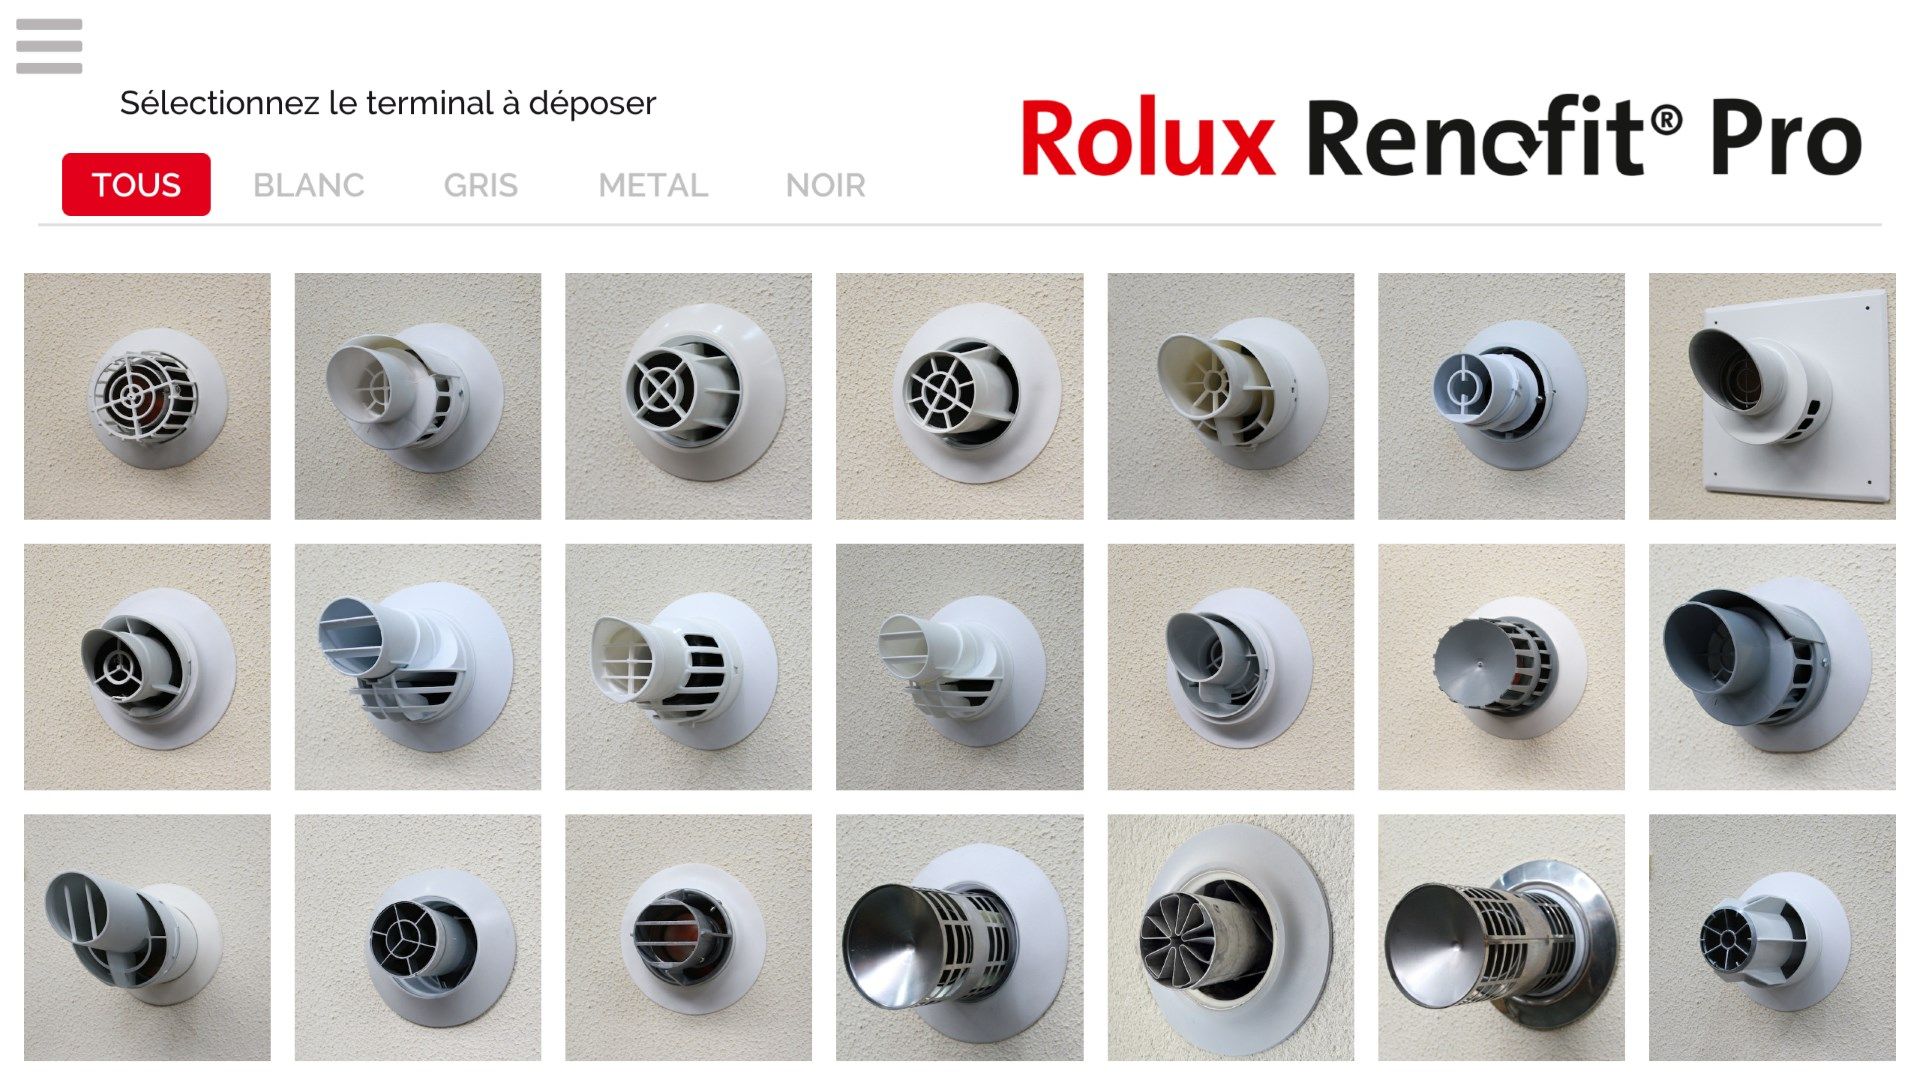 Rolux Renofit®